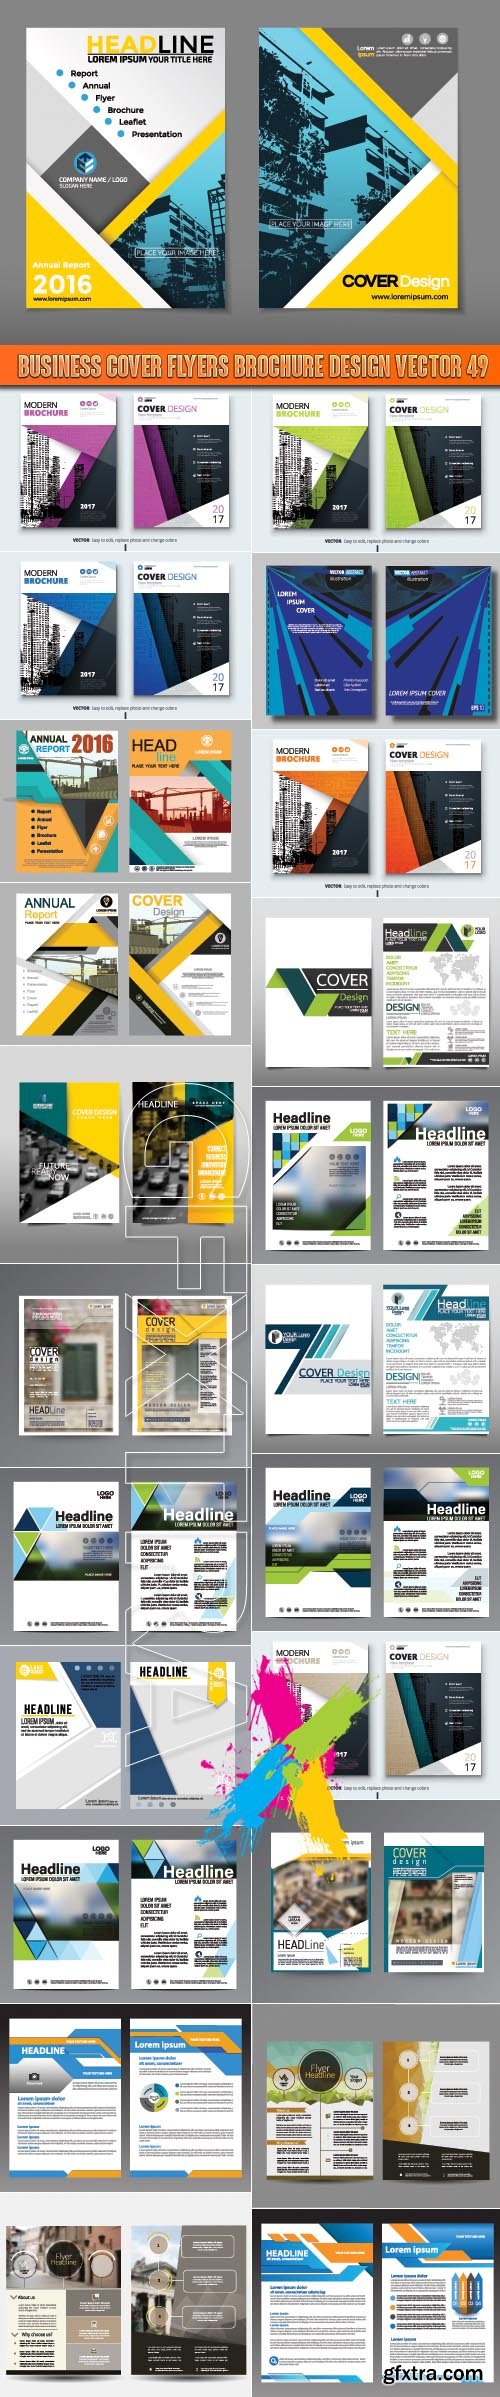 Business cover flyers brochure design vector 49